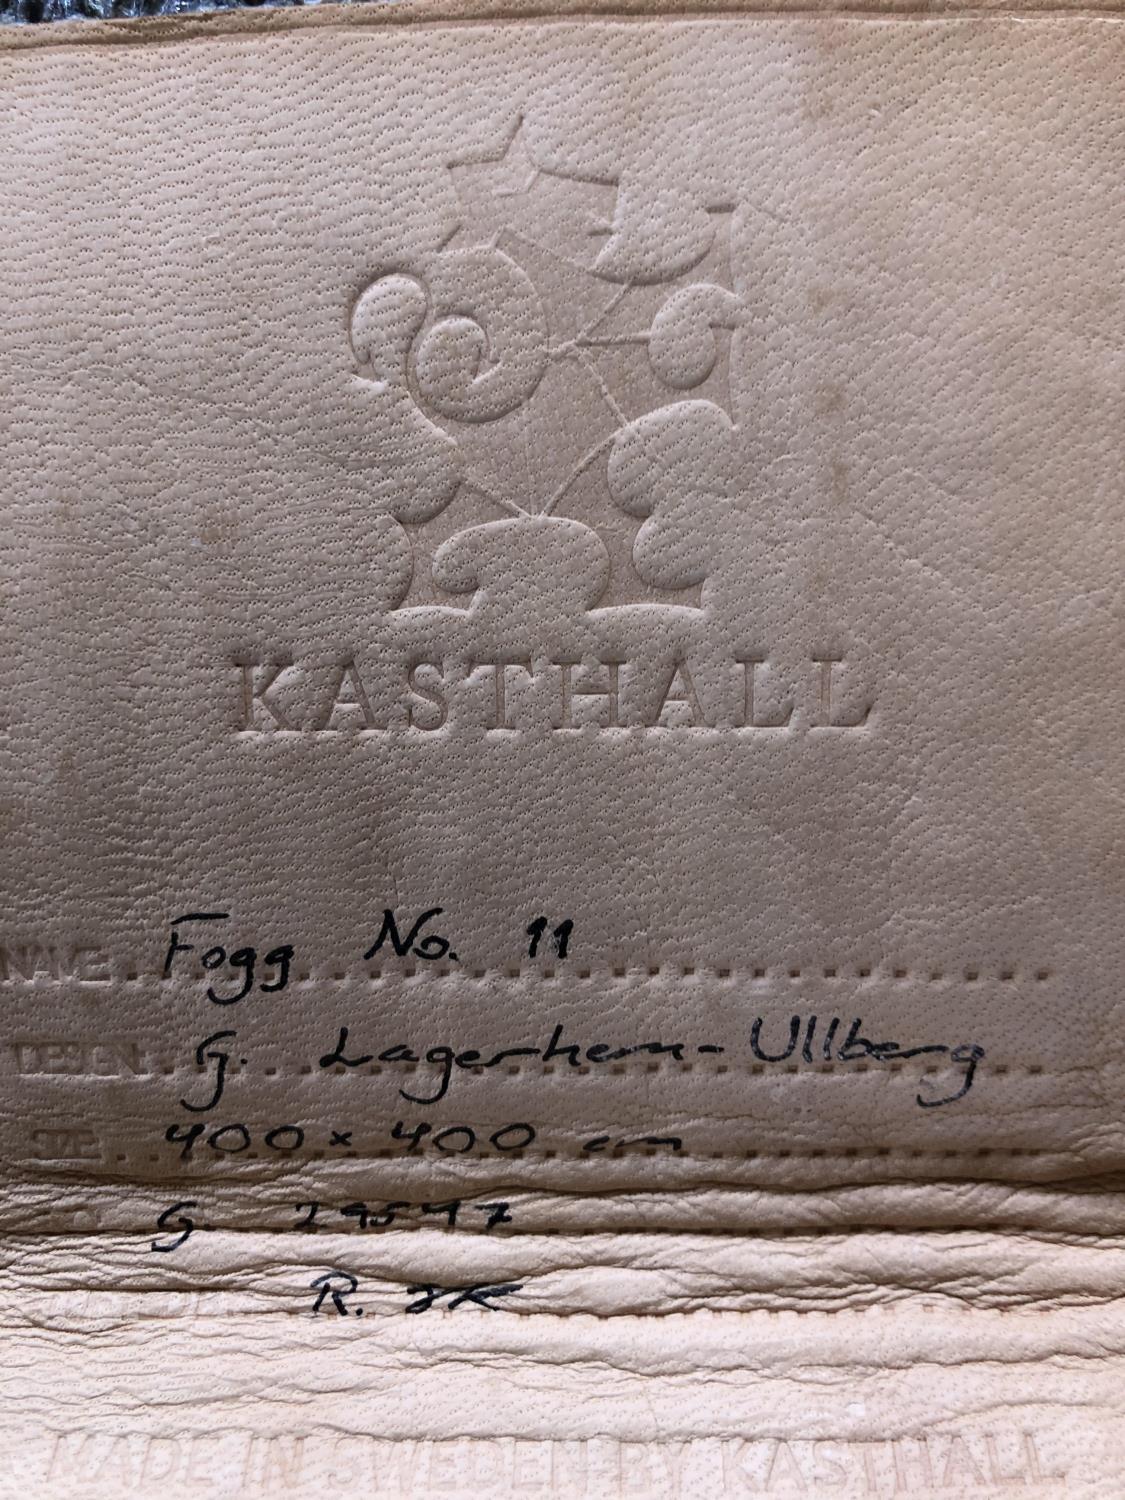 Kashtall, Fogg 11 very fine Swedish made high pile centre rug 550 x 358 - Image 3 of 3